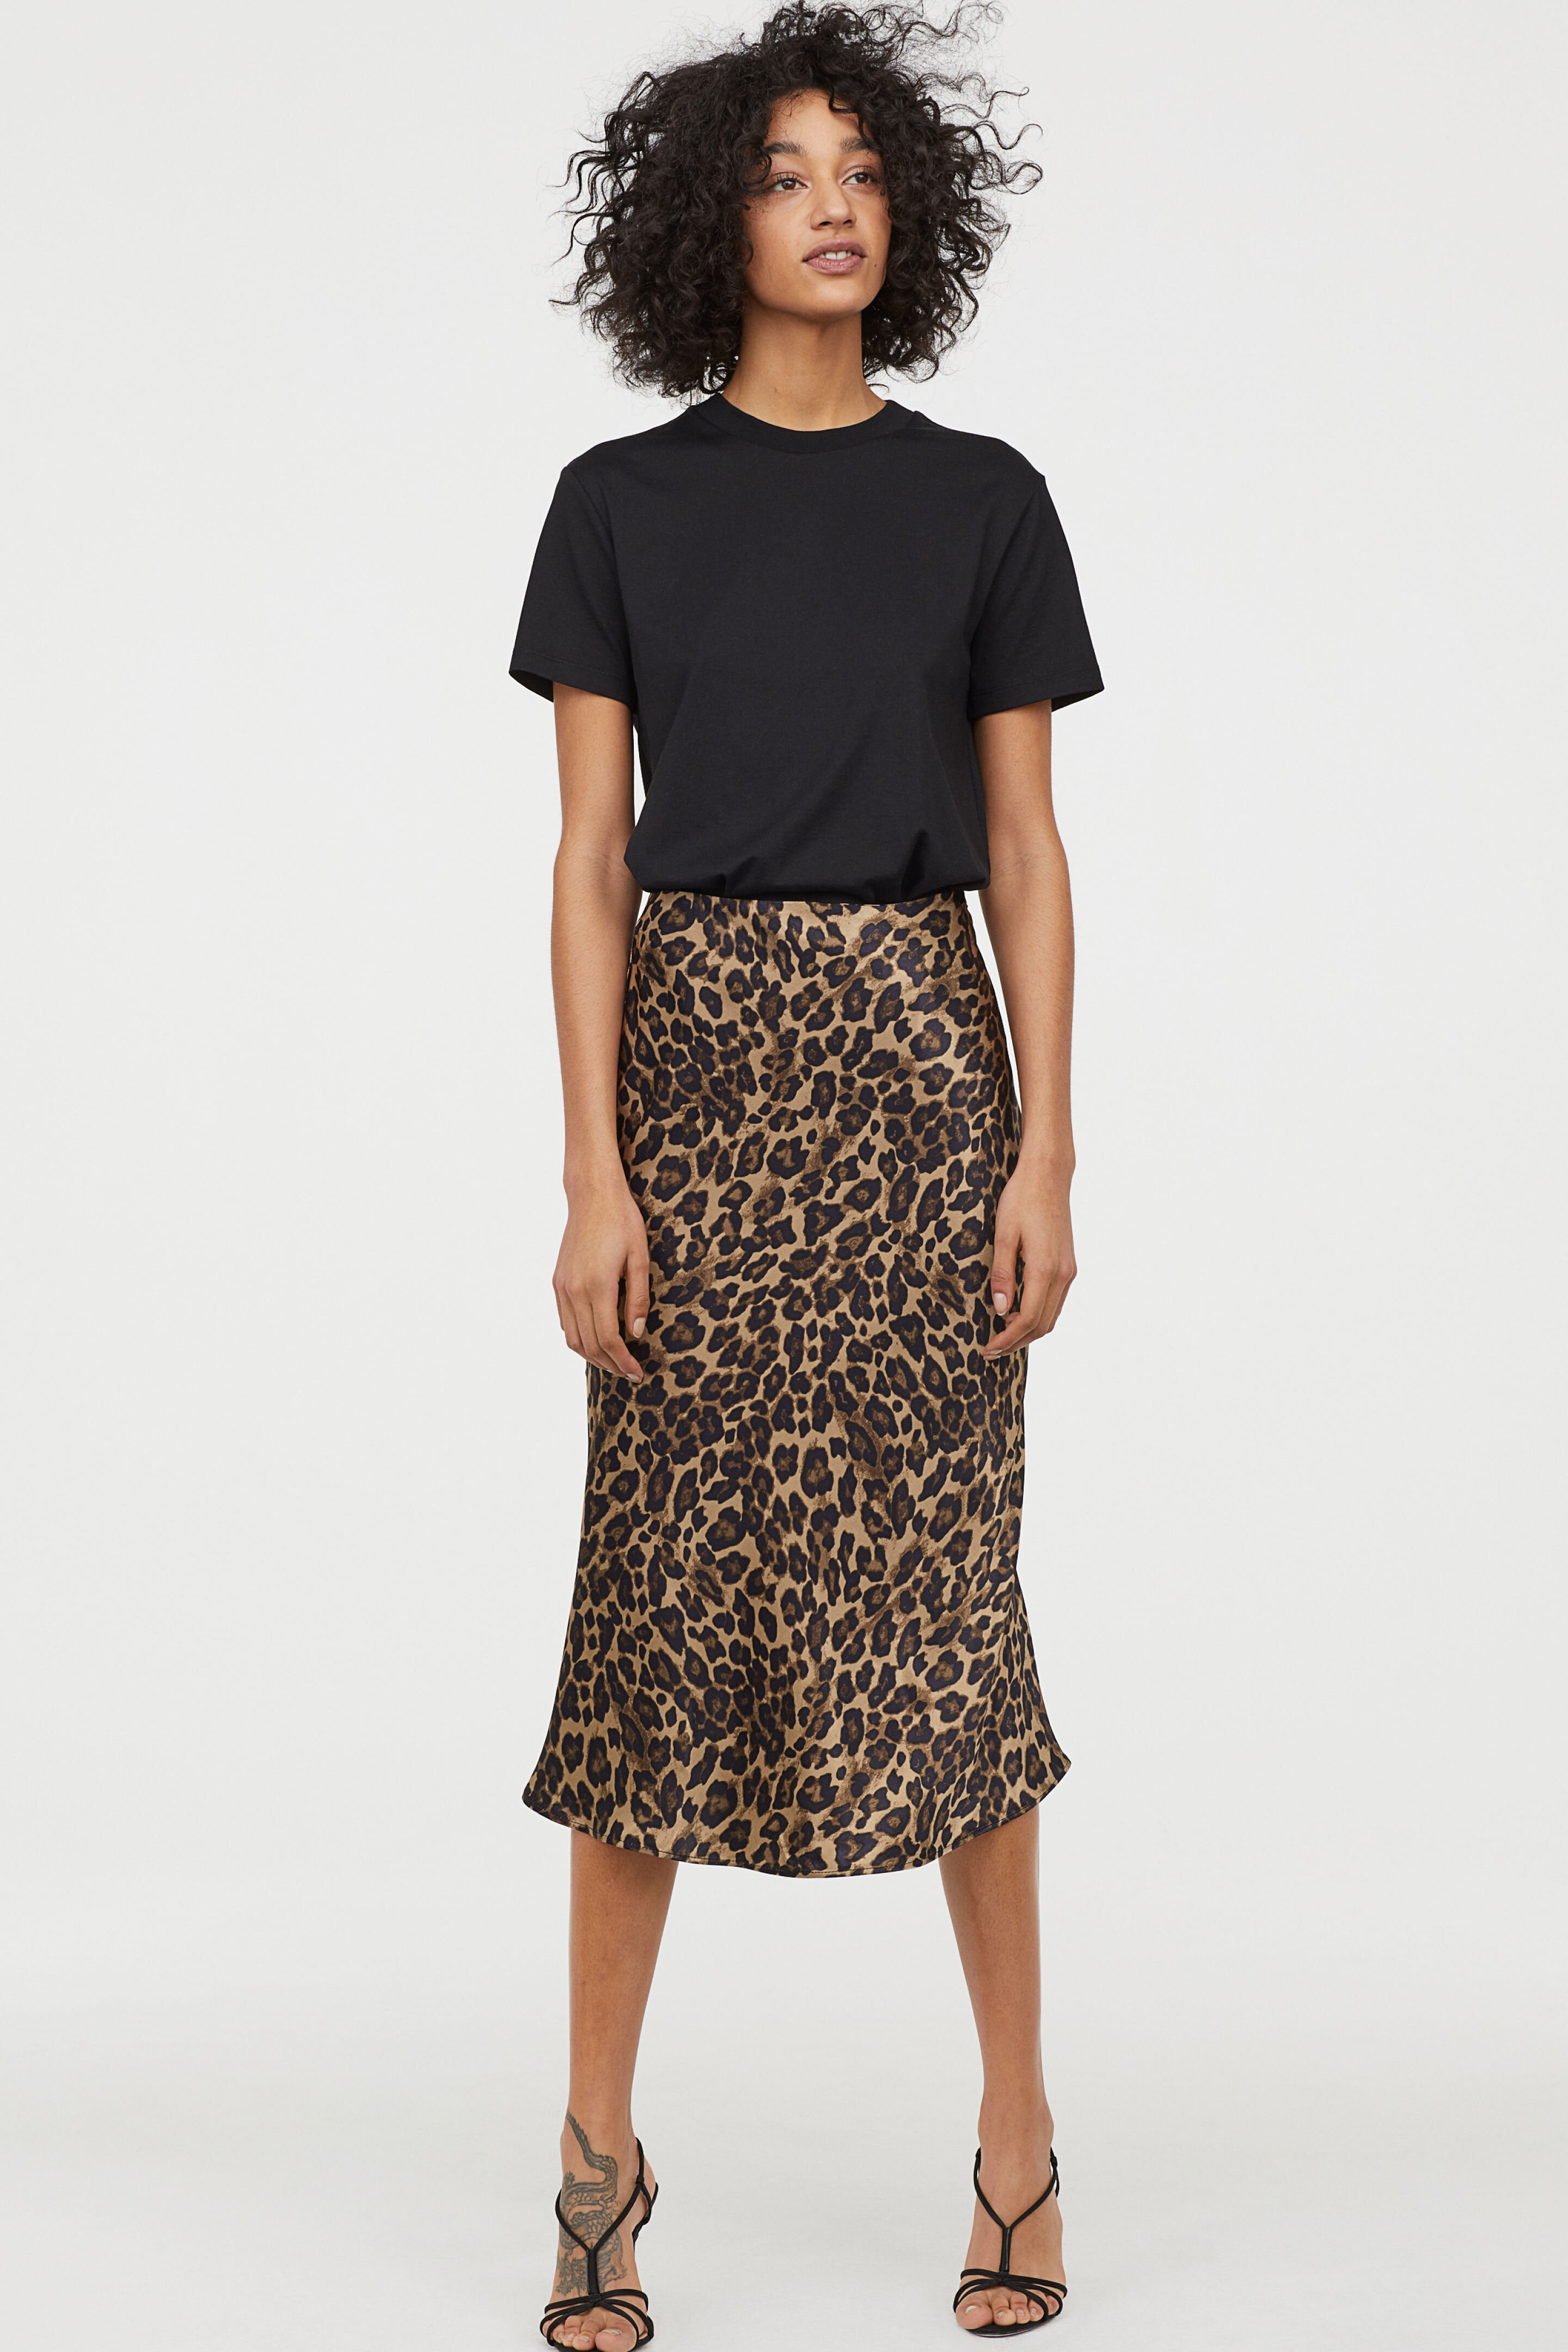 zara red leopard print skirt